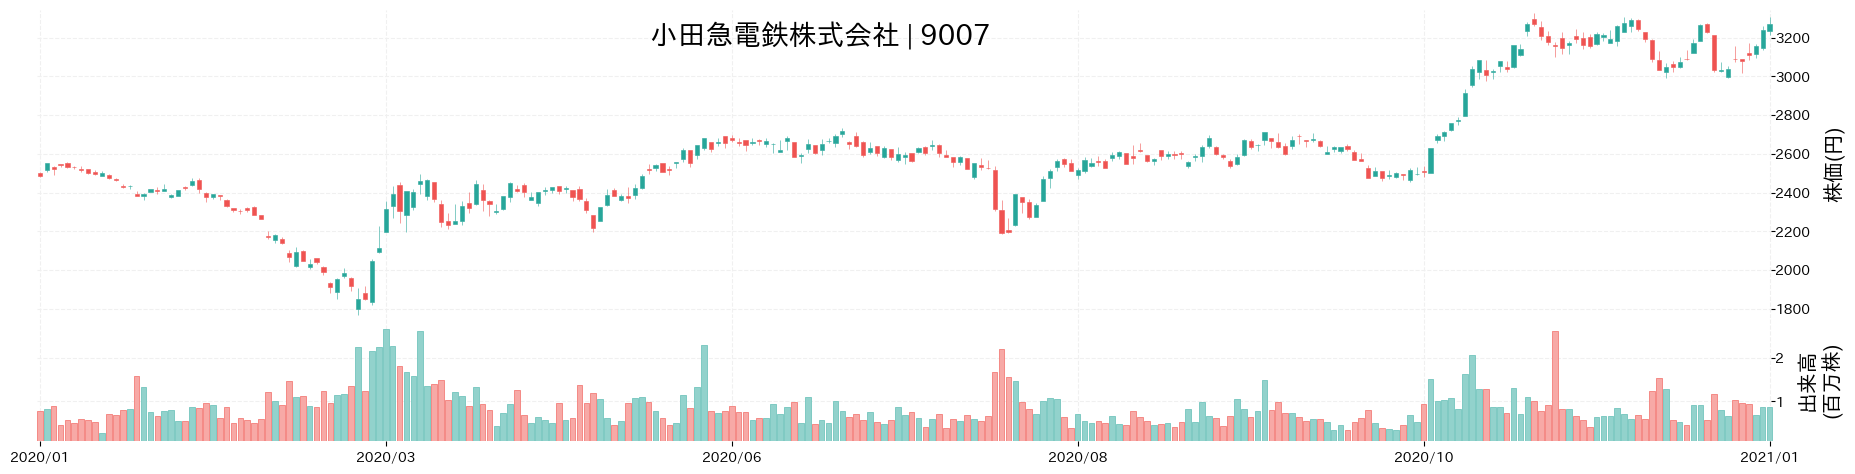 小田急電鉄の株価推移(2020)